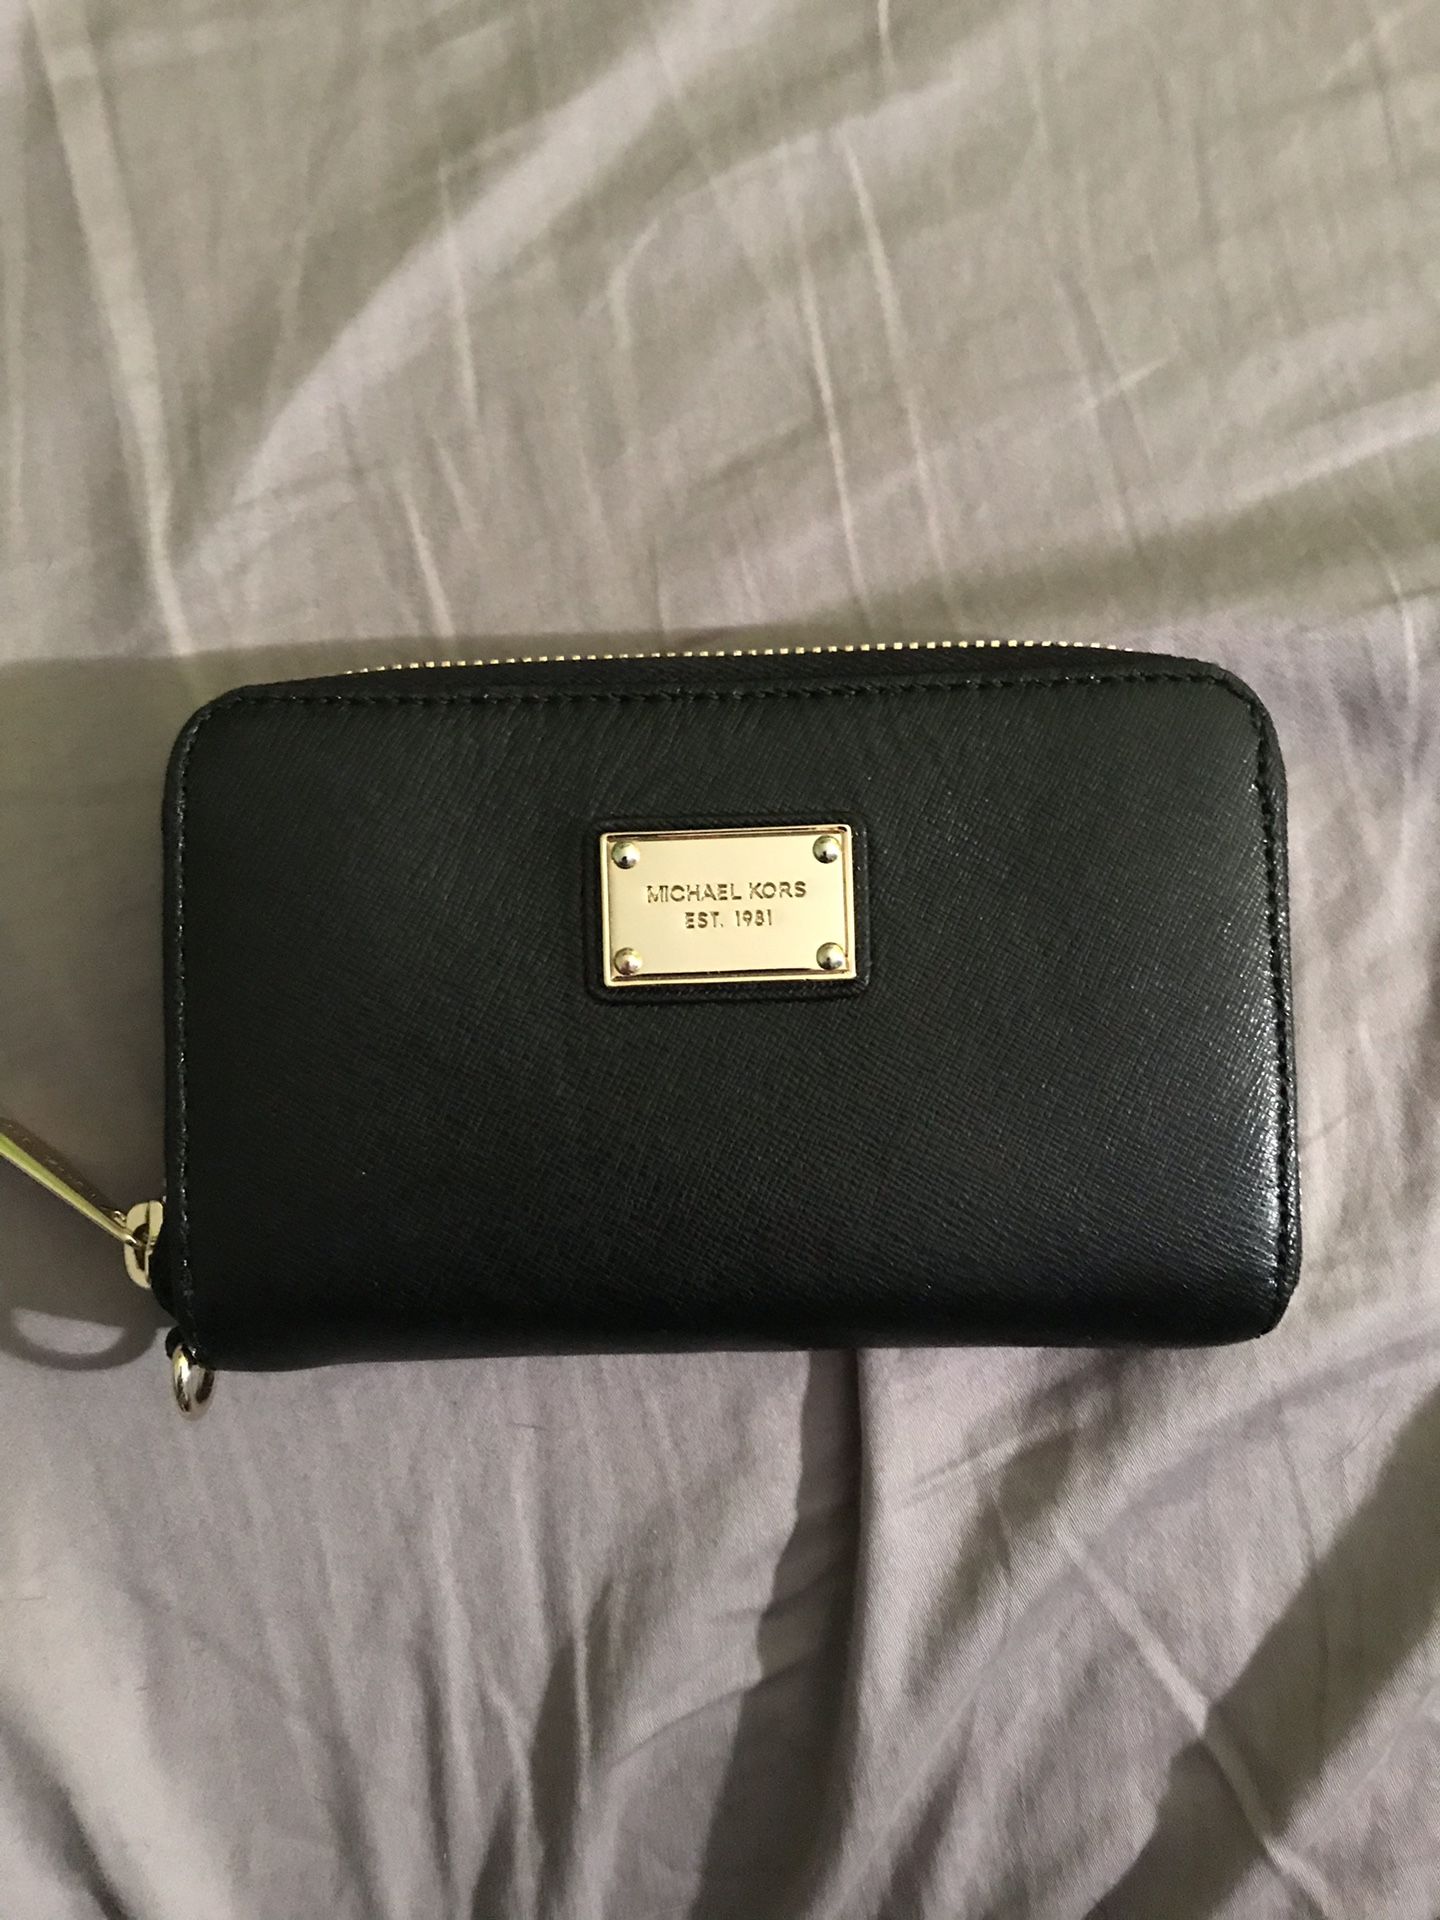 Mk small wallet